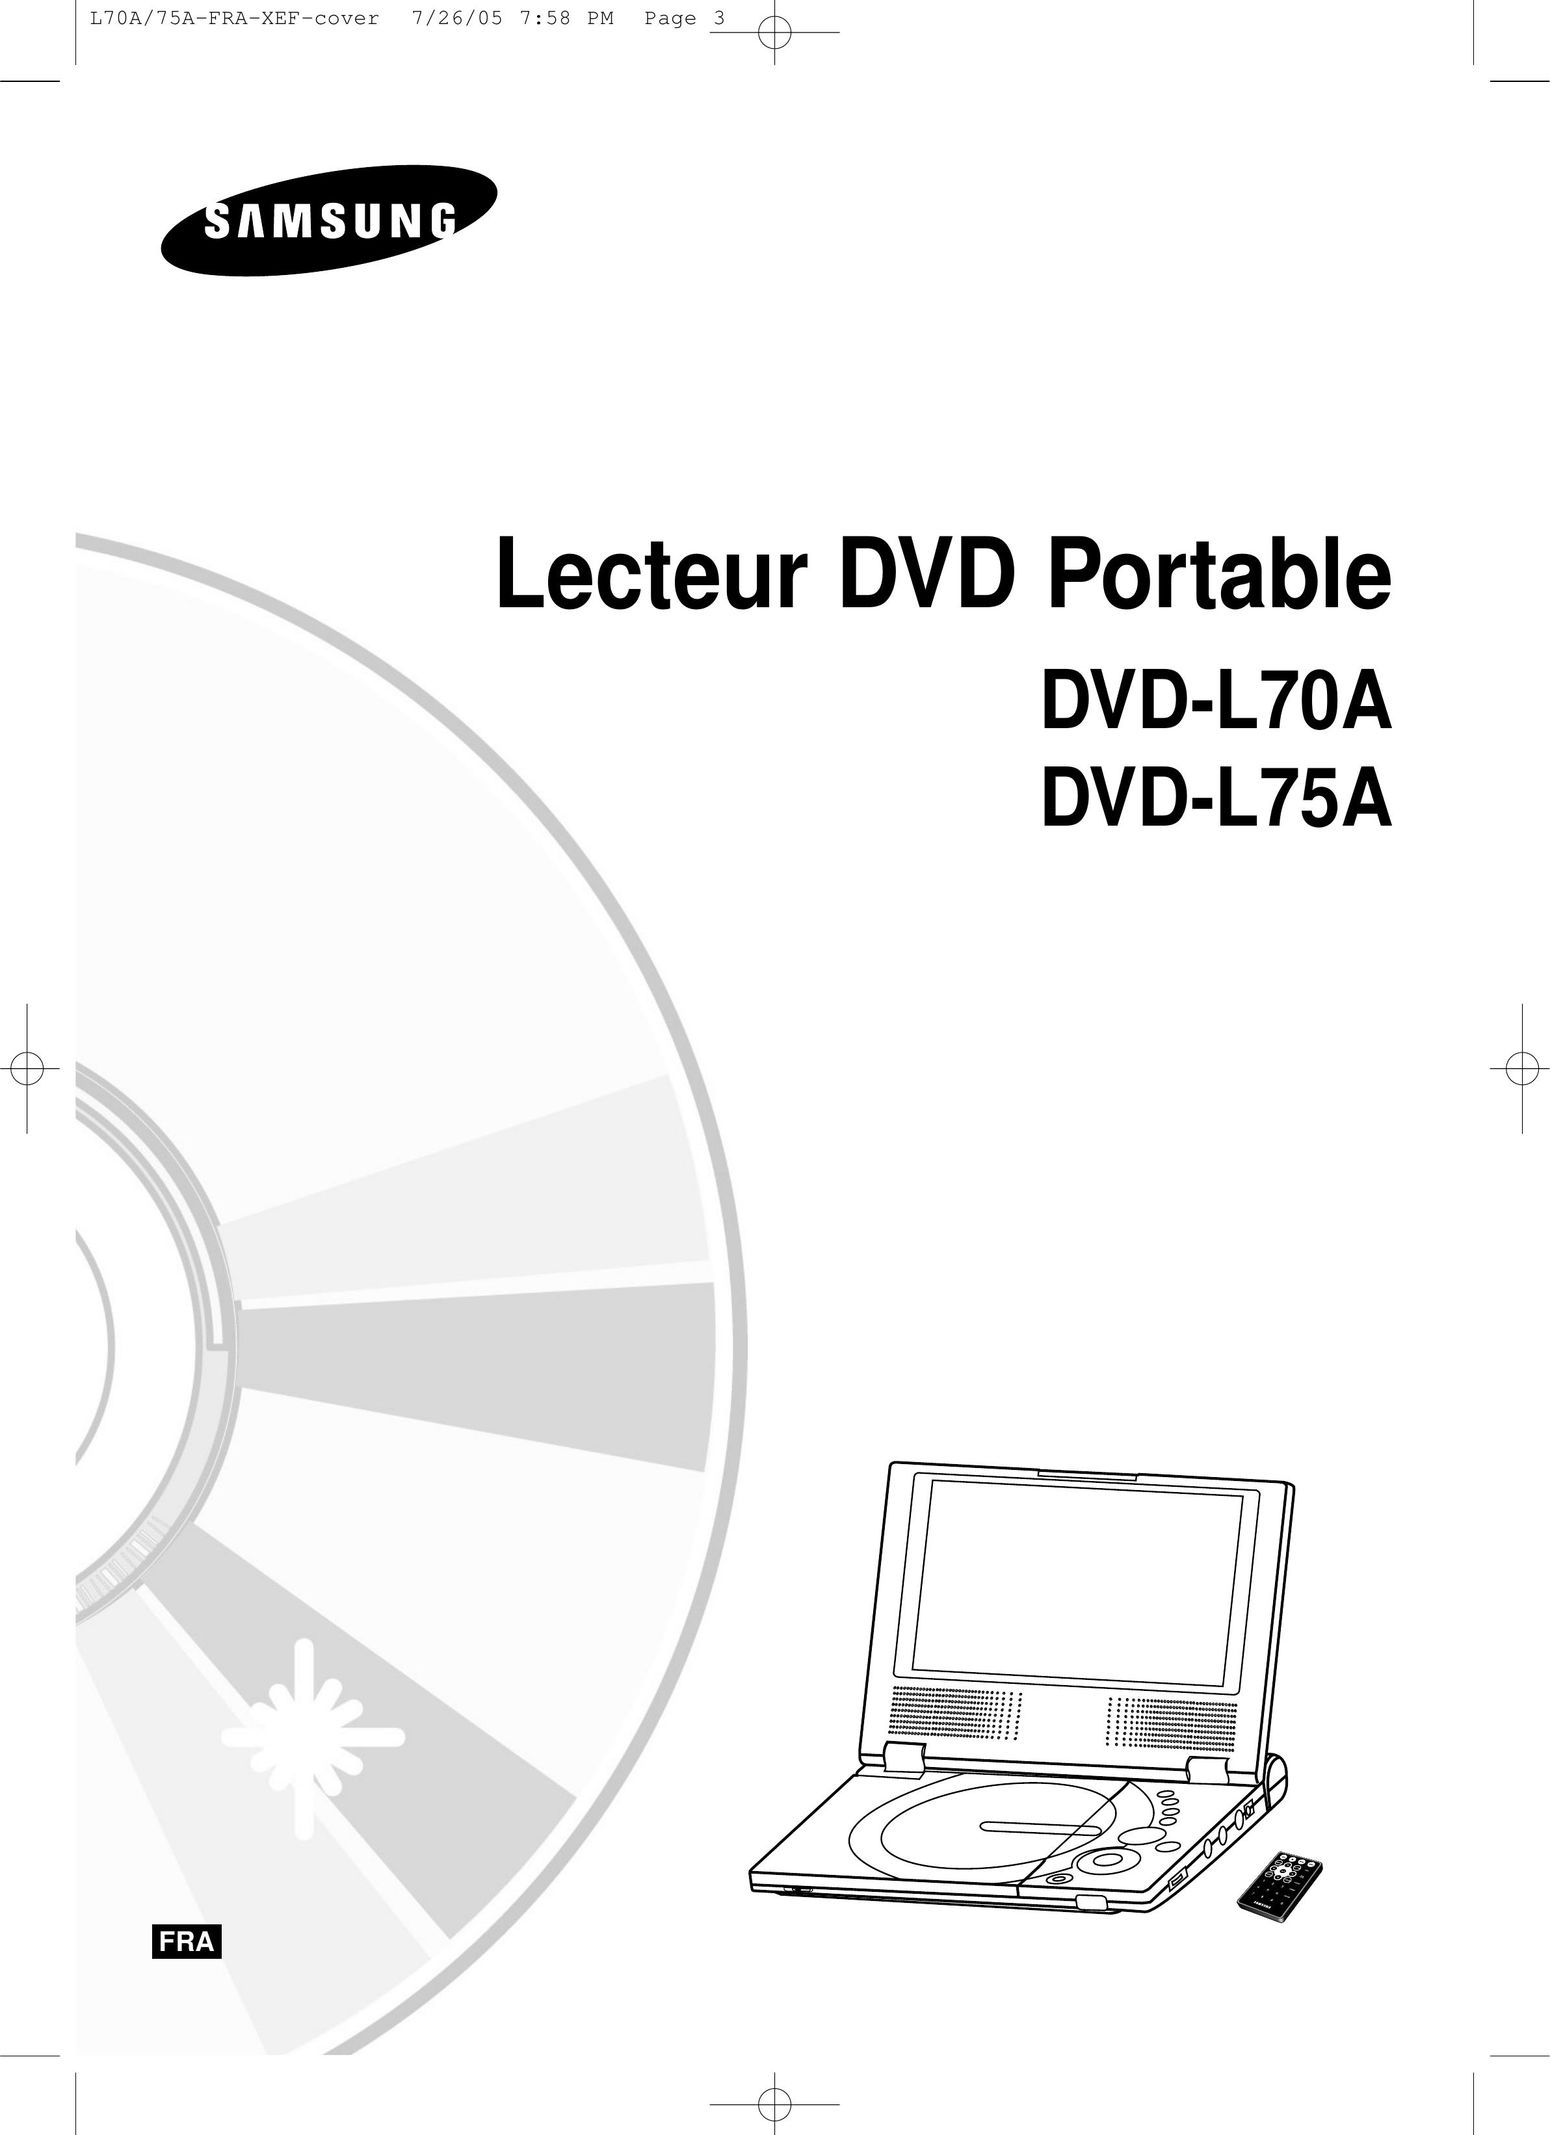 Samsung DVD-L70A Portable DVD Player User Manual